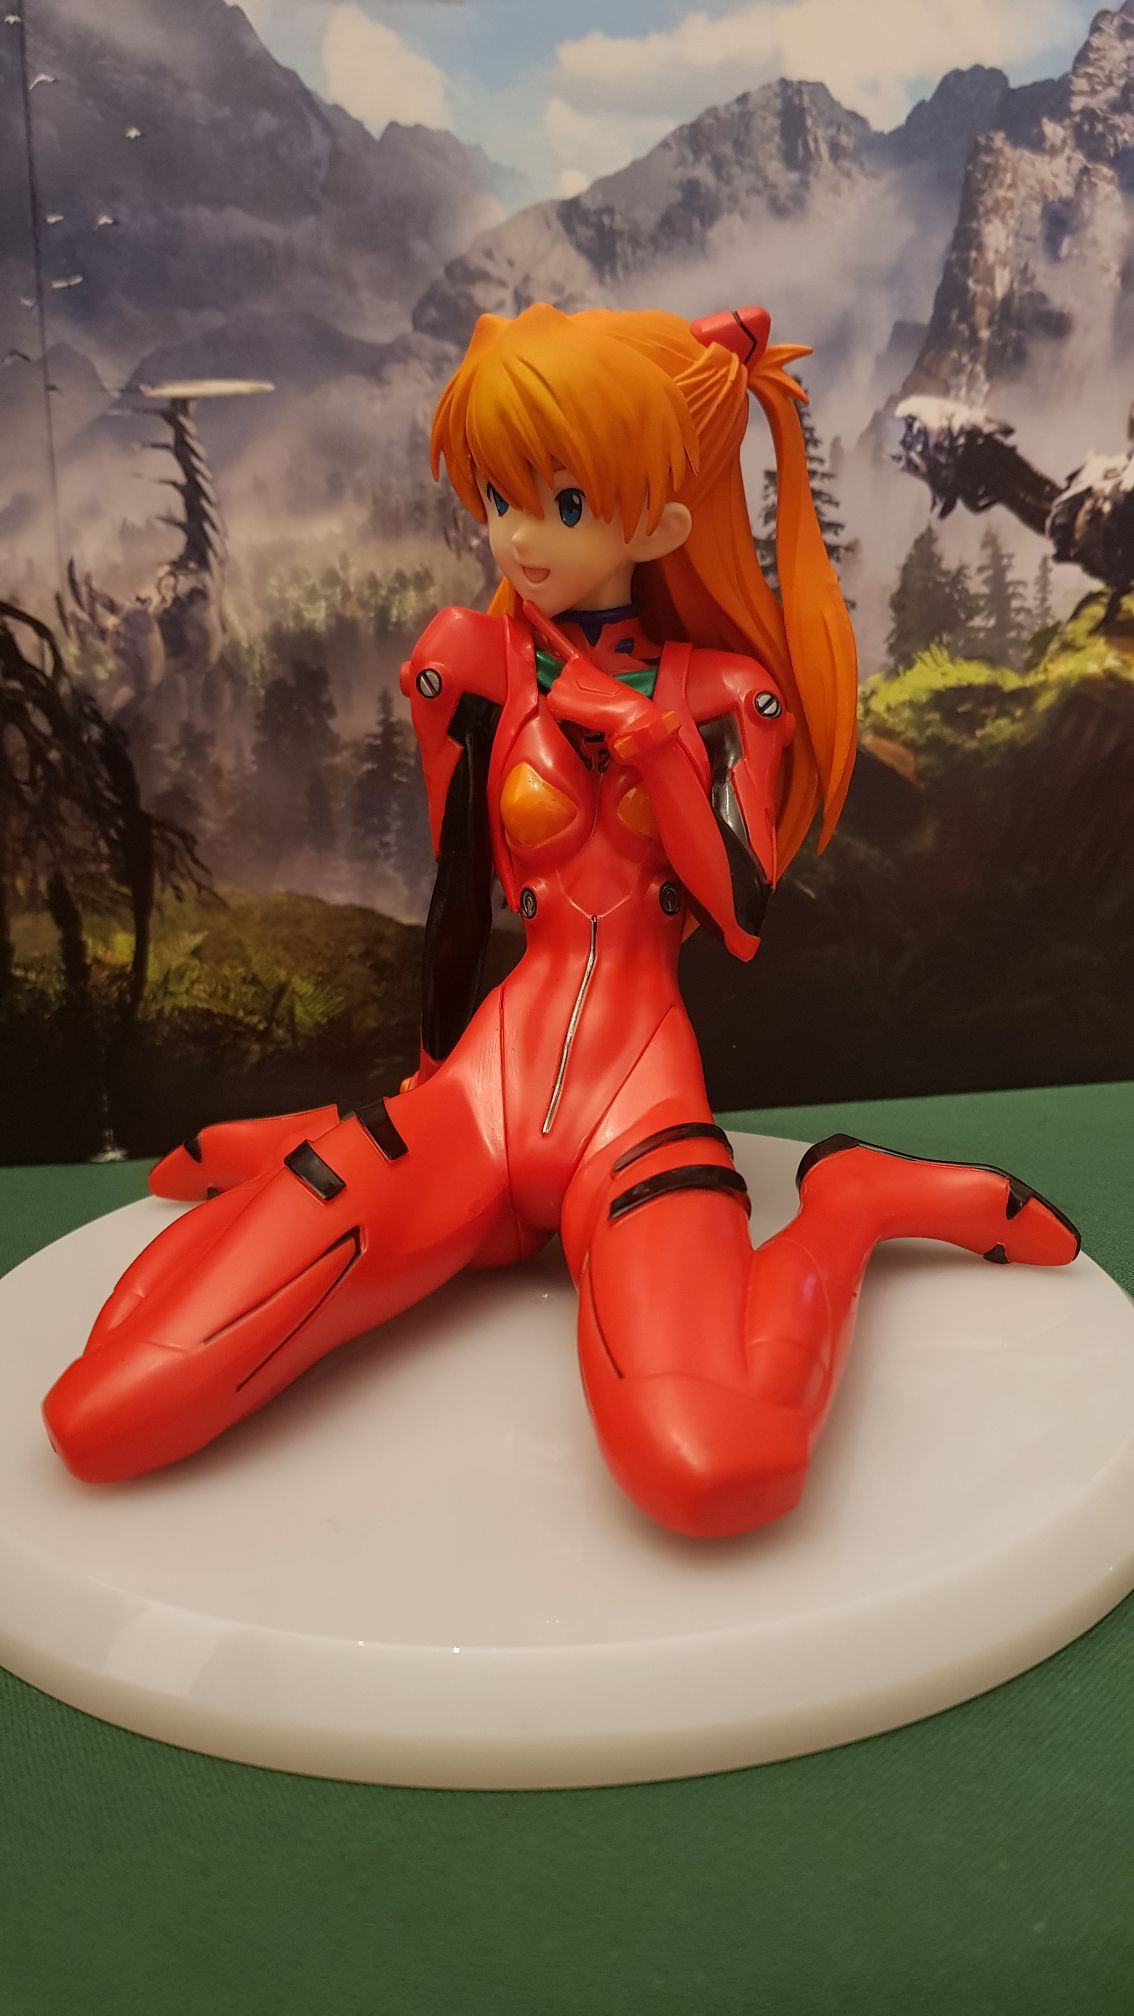 Evangelion - Asuka Sōryū Langley - Sega action figure collectible - Main Image 1